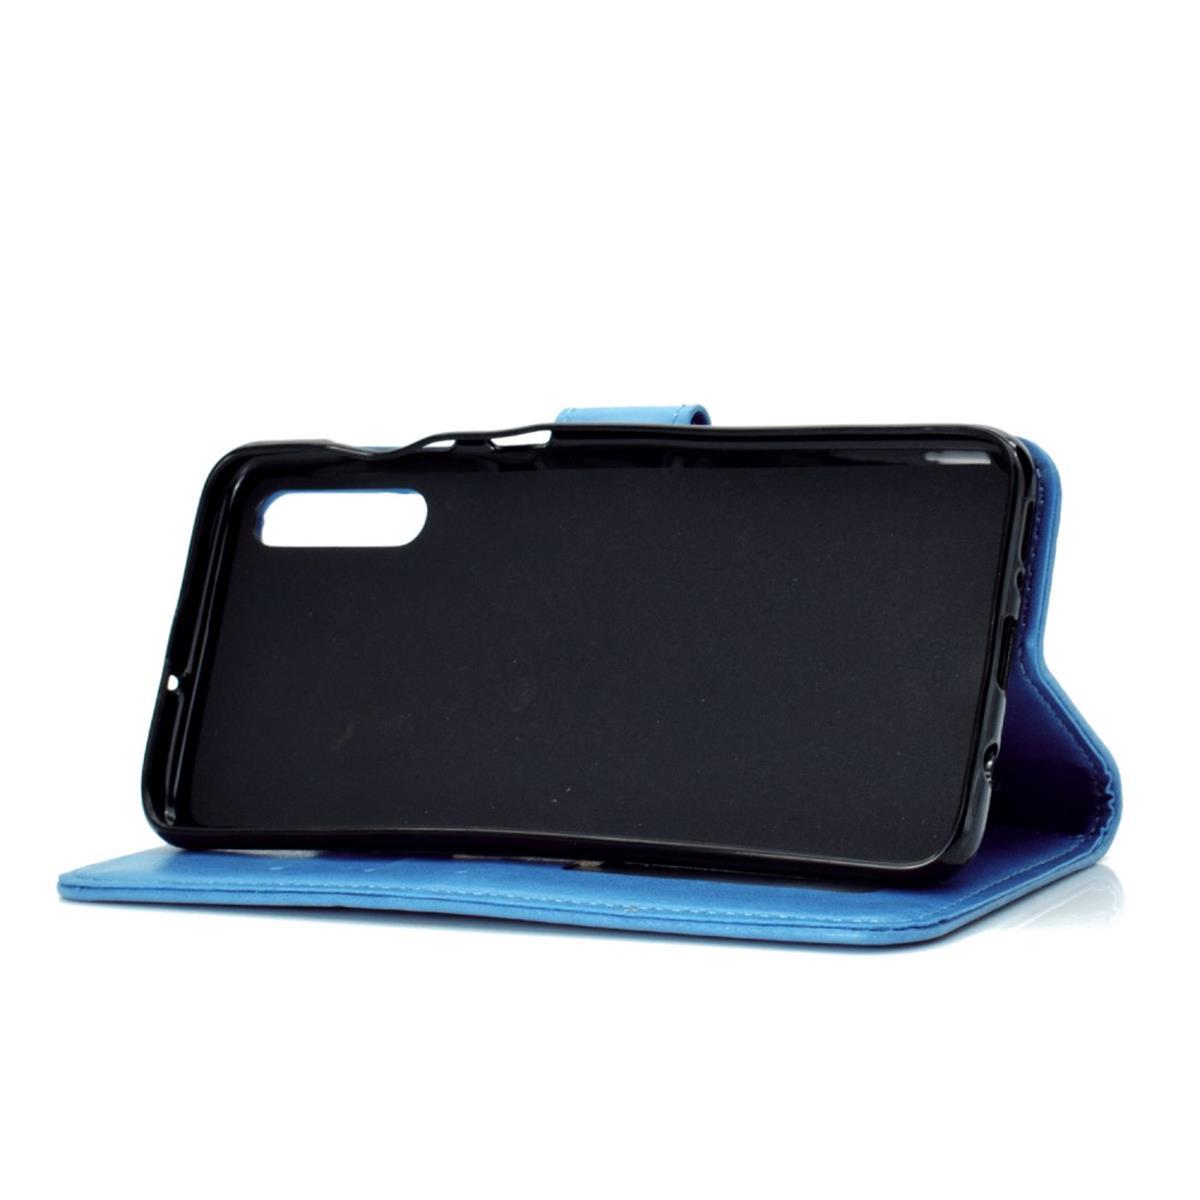 Hülle für Samsung Galaxy A50/A30s Handyhülle Flip Case Schutzhülle Cover Etui Mandala Blau